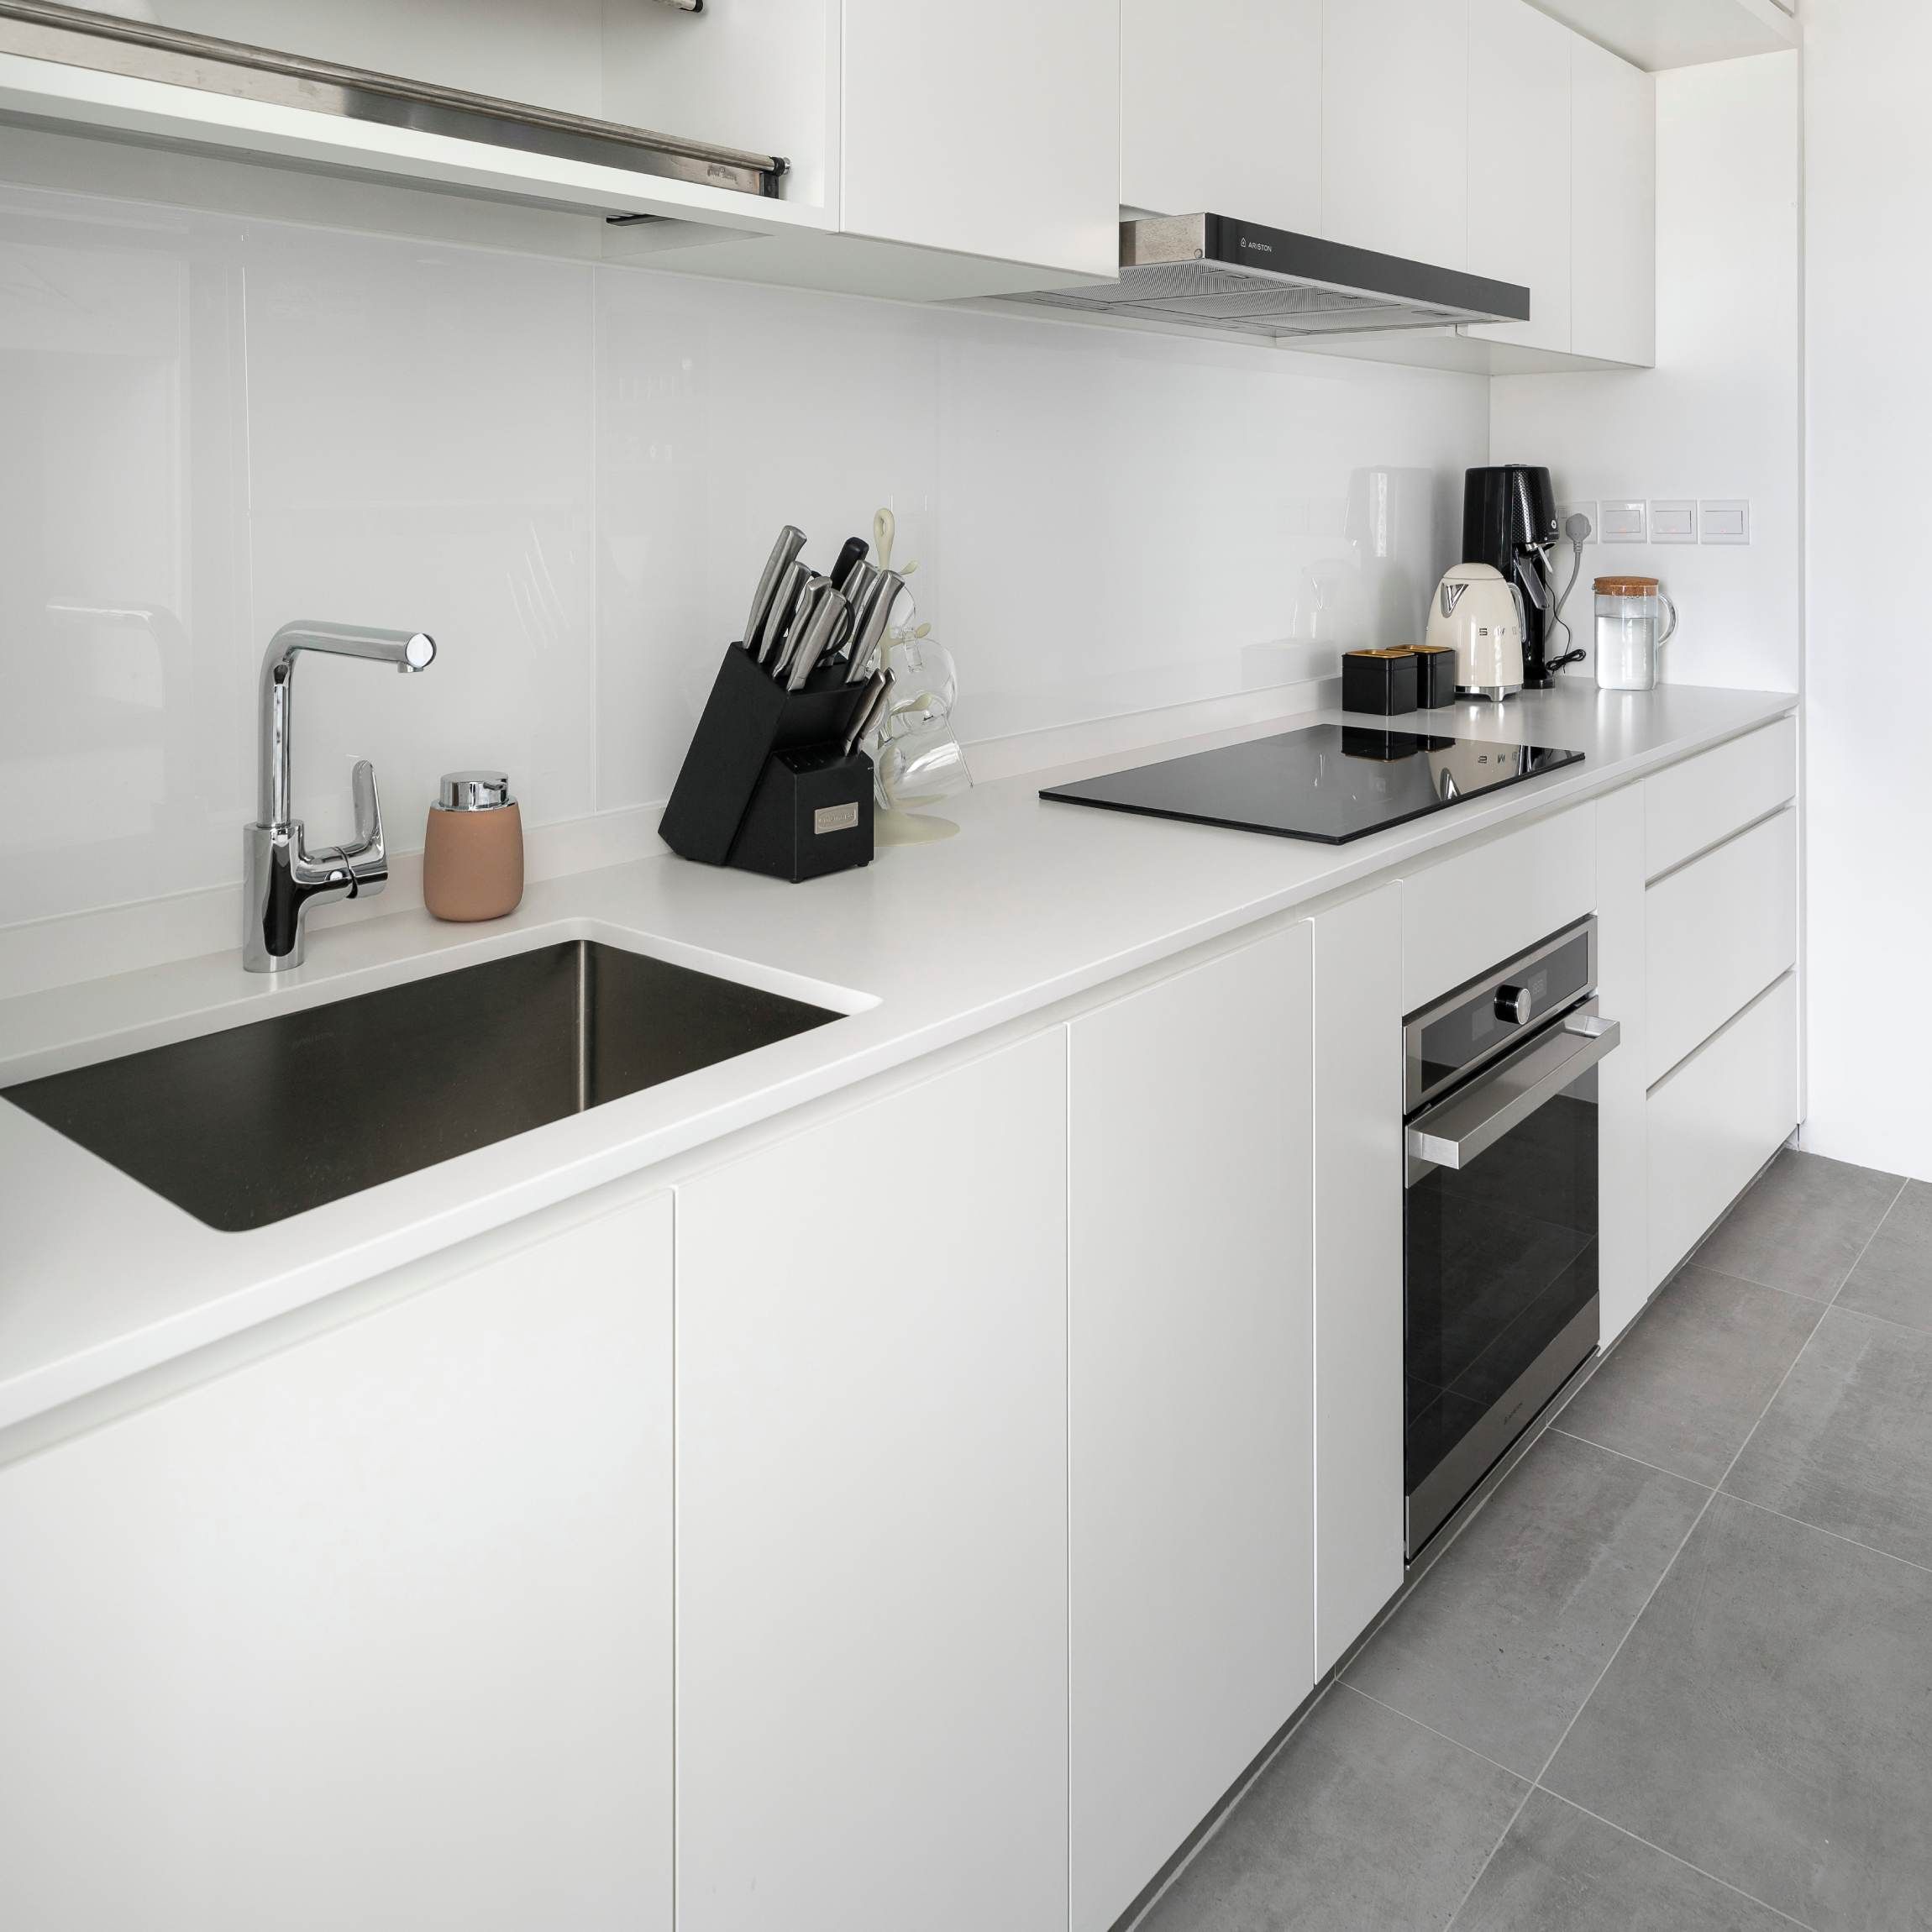 Modern White Laminate Design For Kitchen Spaces